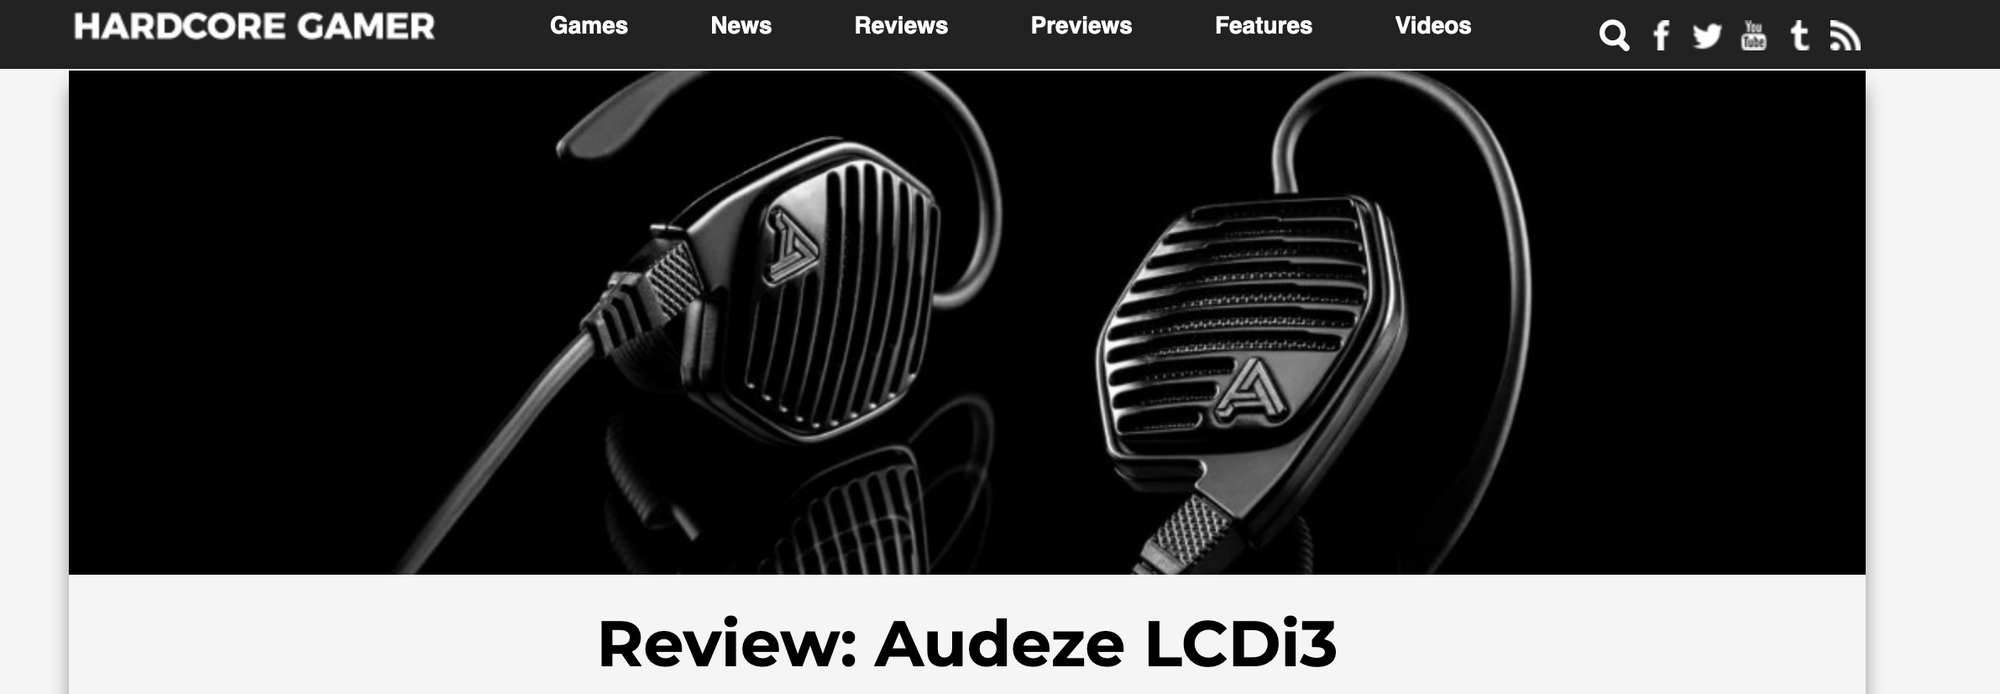 Hardcore Gamer Reviews the Audeze LCDi3